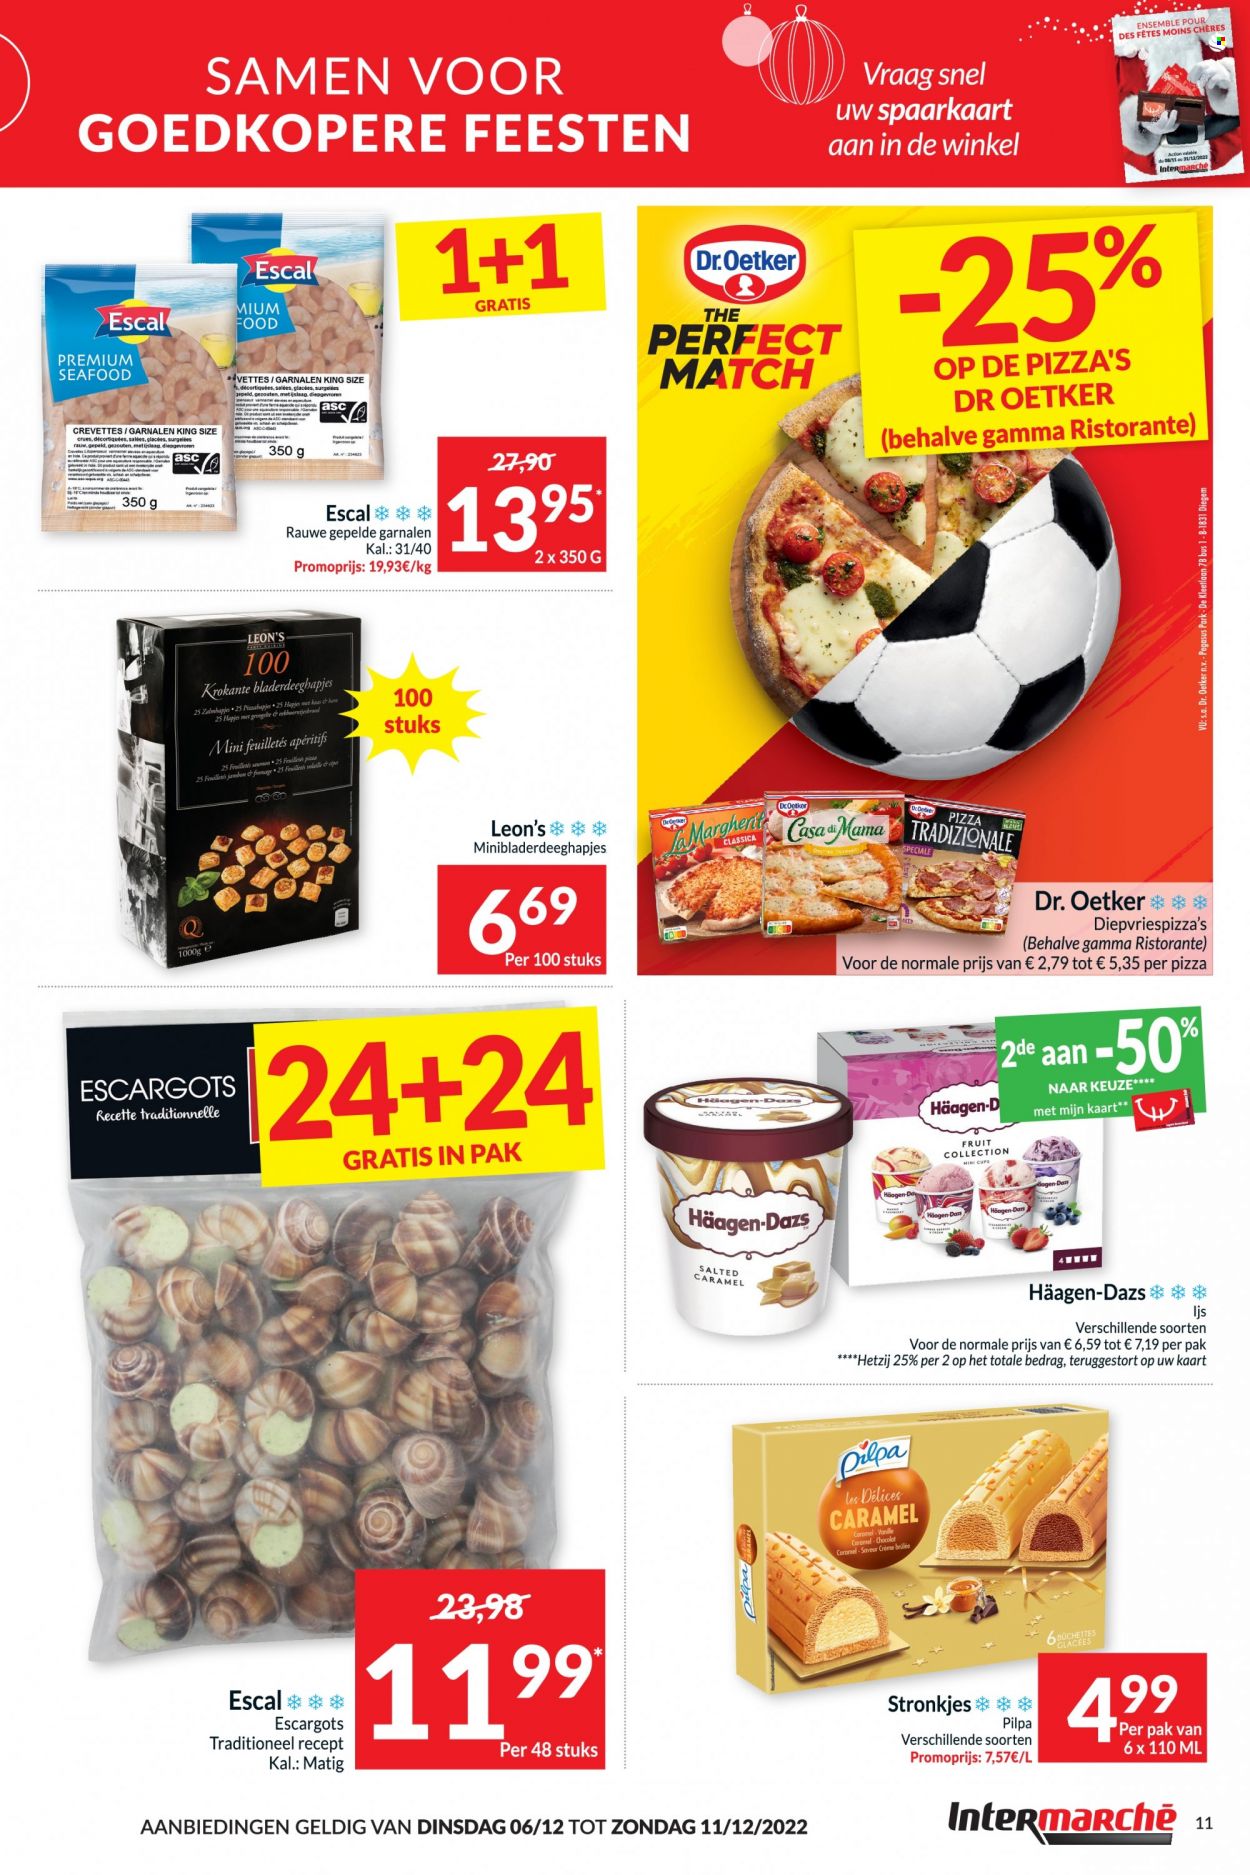 thumbnail - Intermarché-aanbieding - 06/12/2022 - 11/12/2022 -  producten in de aanbieding - eekhoorntjesbrood, crème brûlée, Dr. Oetker, garnalen, ham, kaas, Gamma. Pagina 11.